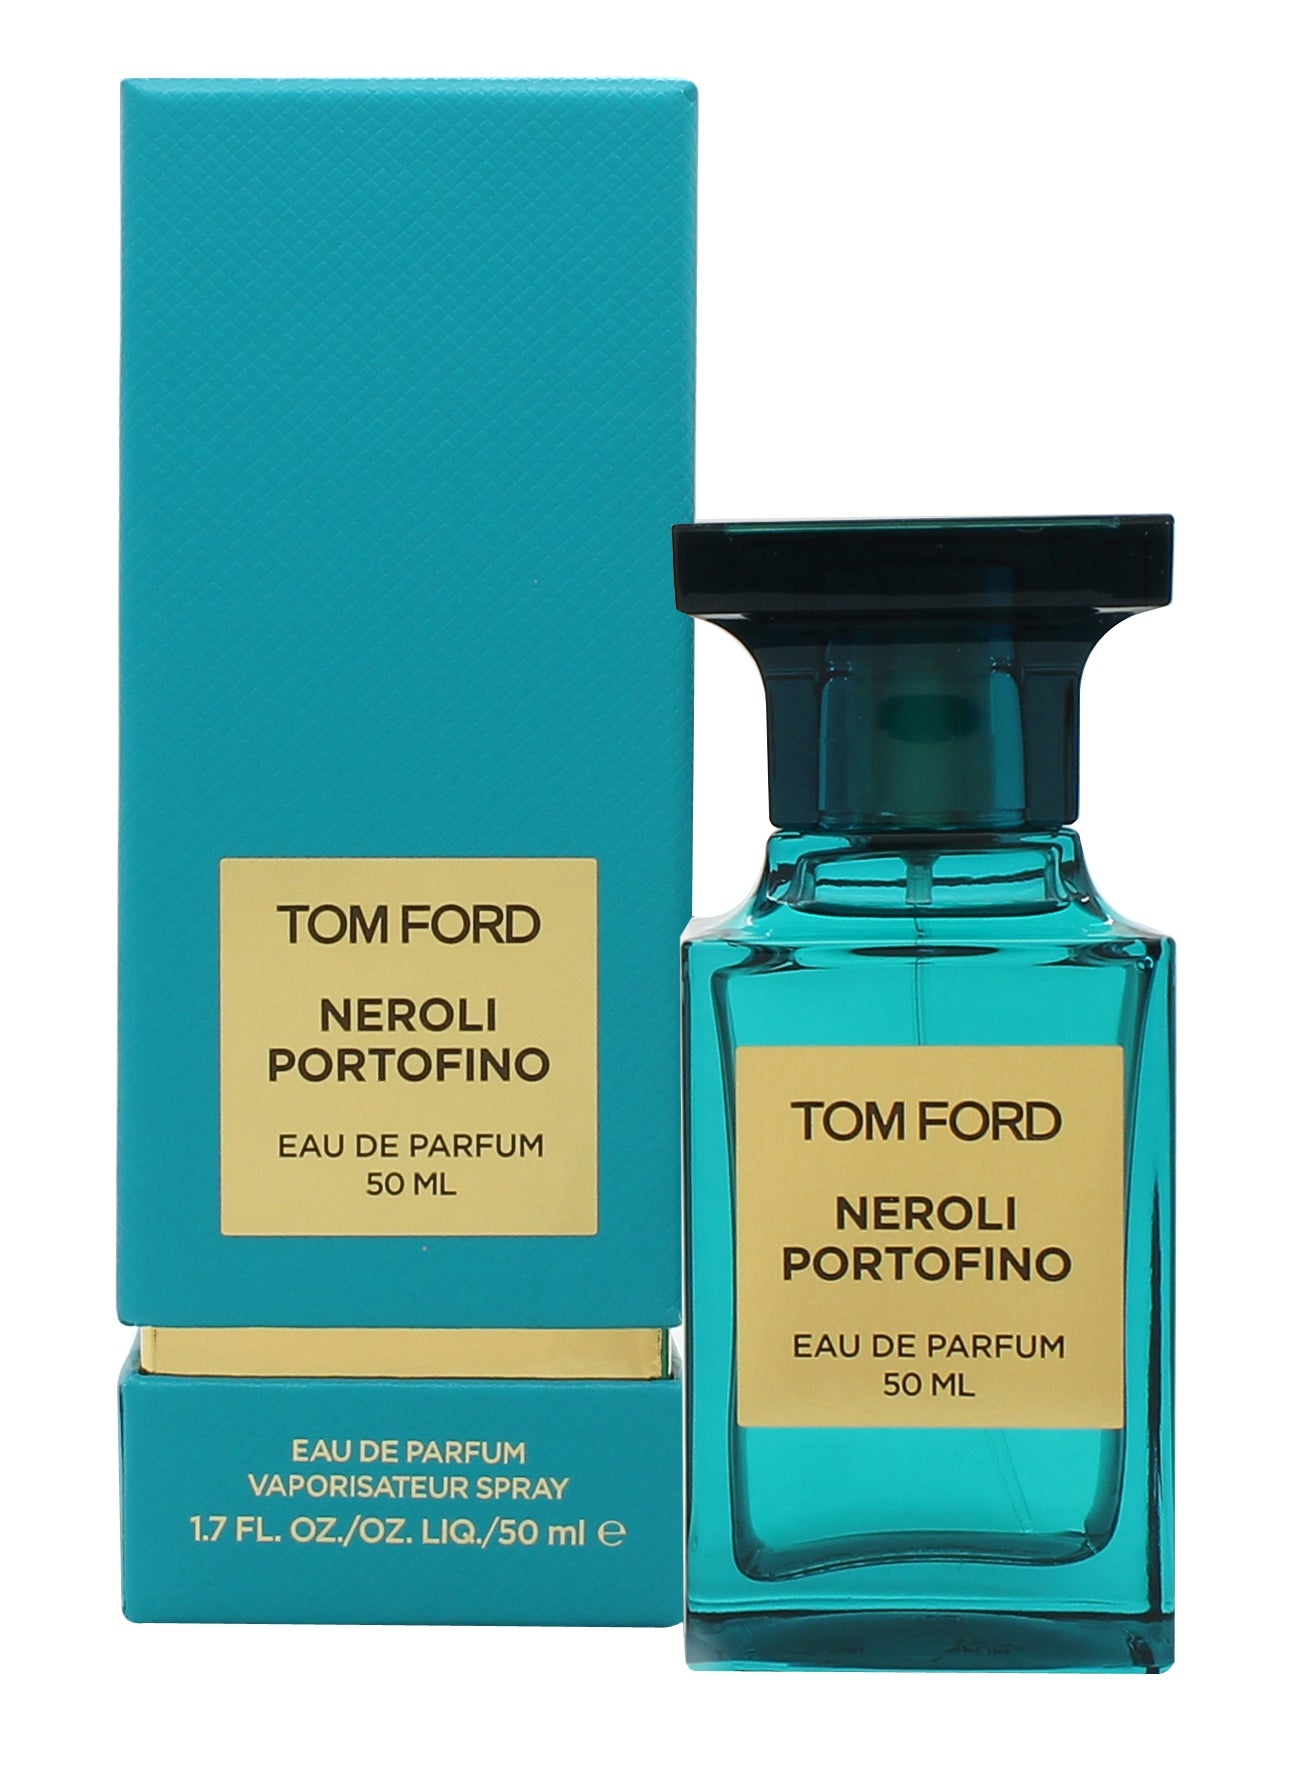 View Tom Ford Private Blend Neroli Portofino Eau de Parfum 50ml Spray information